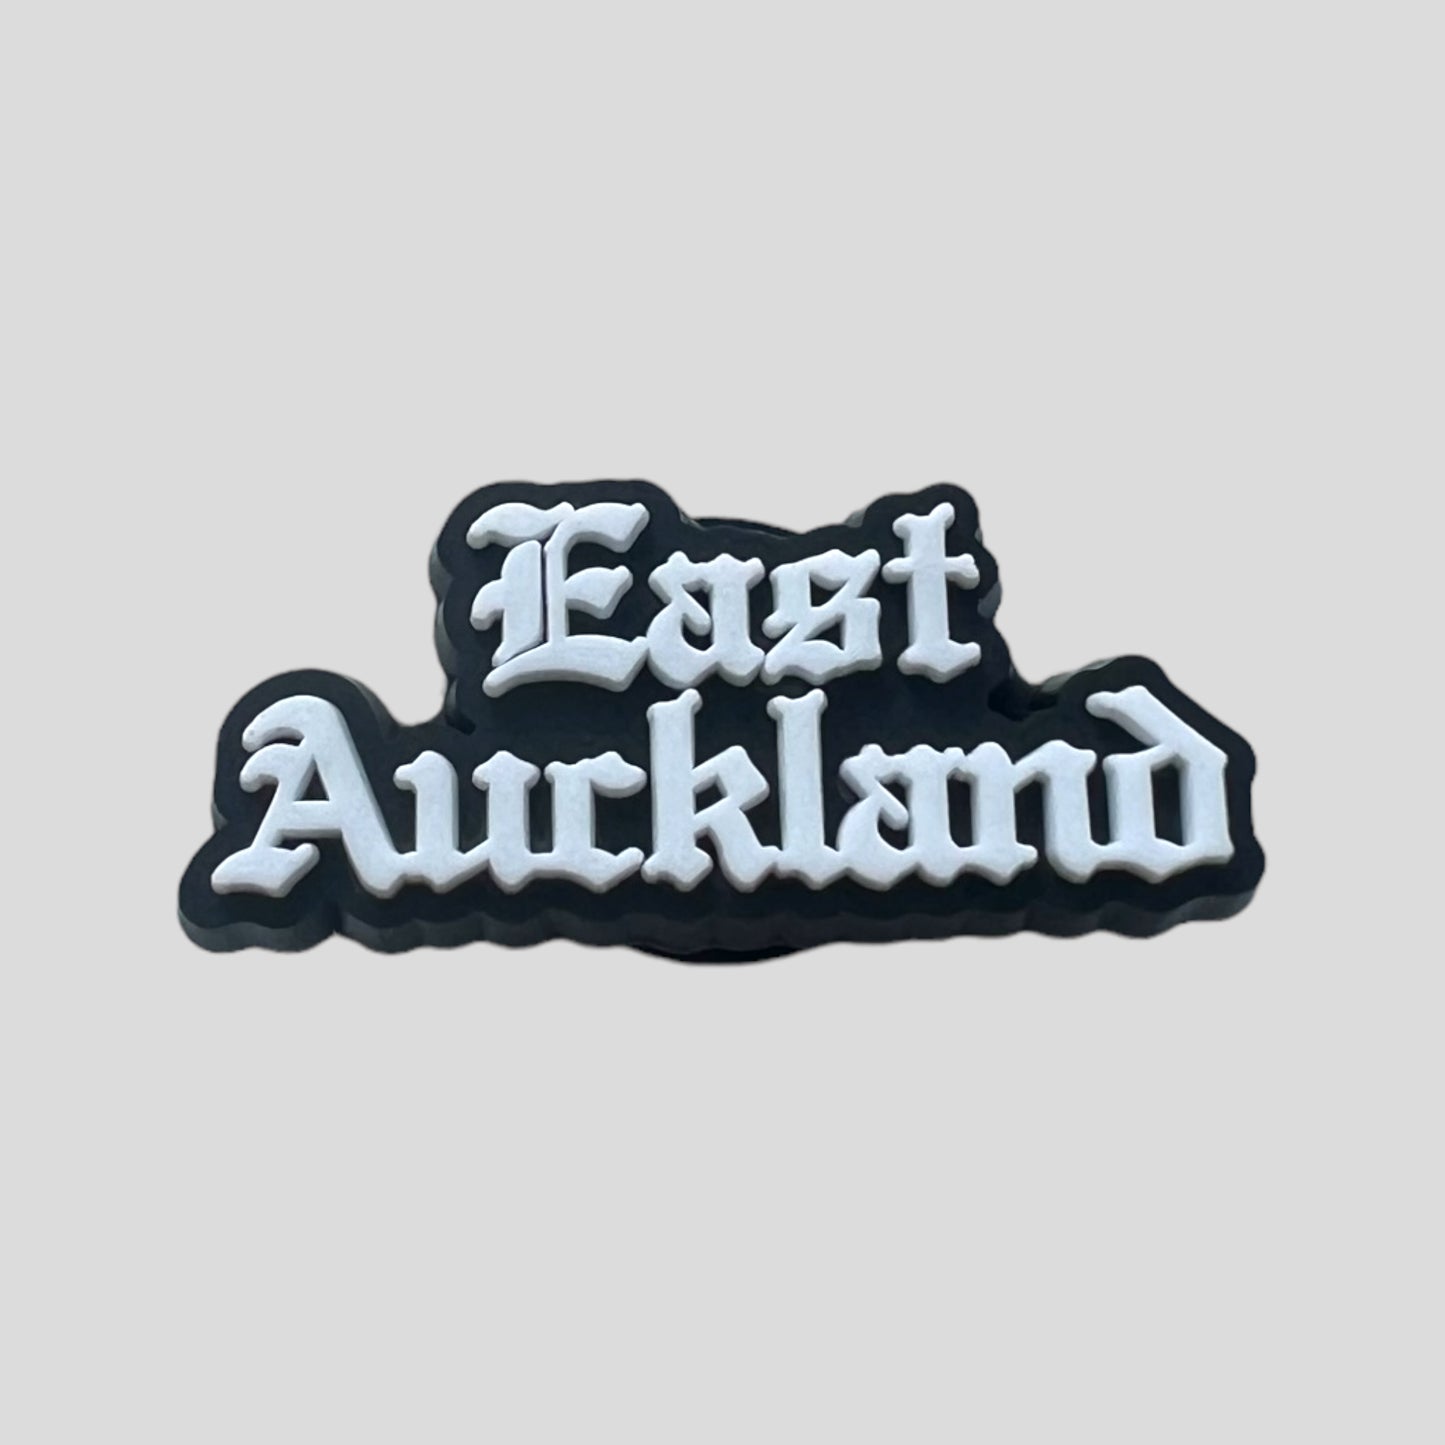 East Auckland | New Zealand